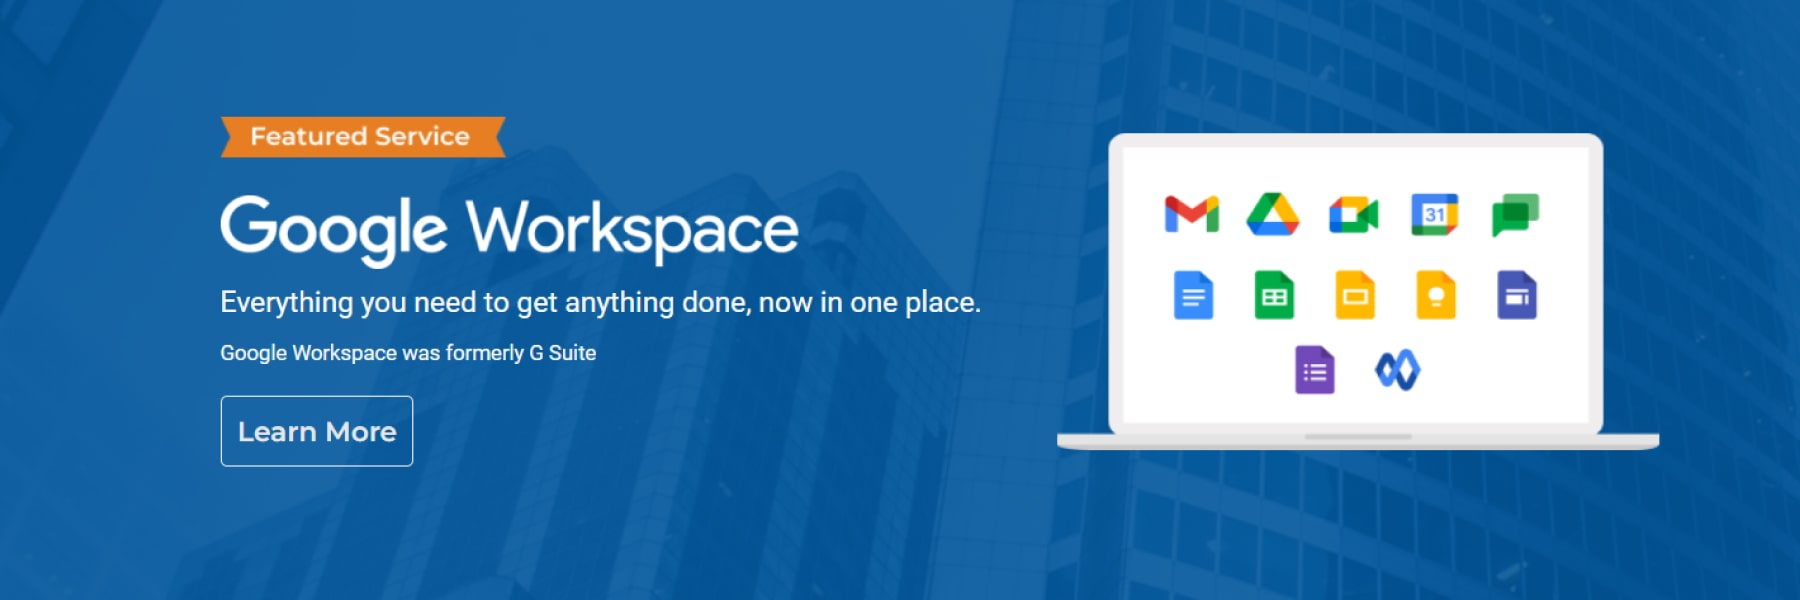 Google Workspace Deal